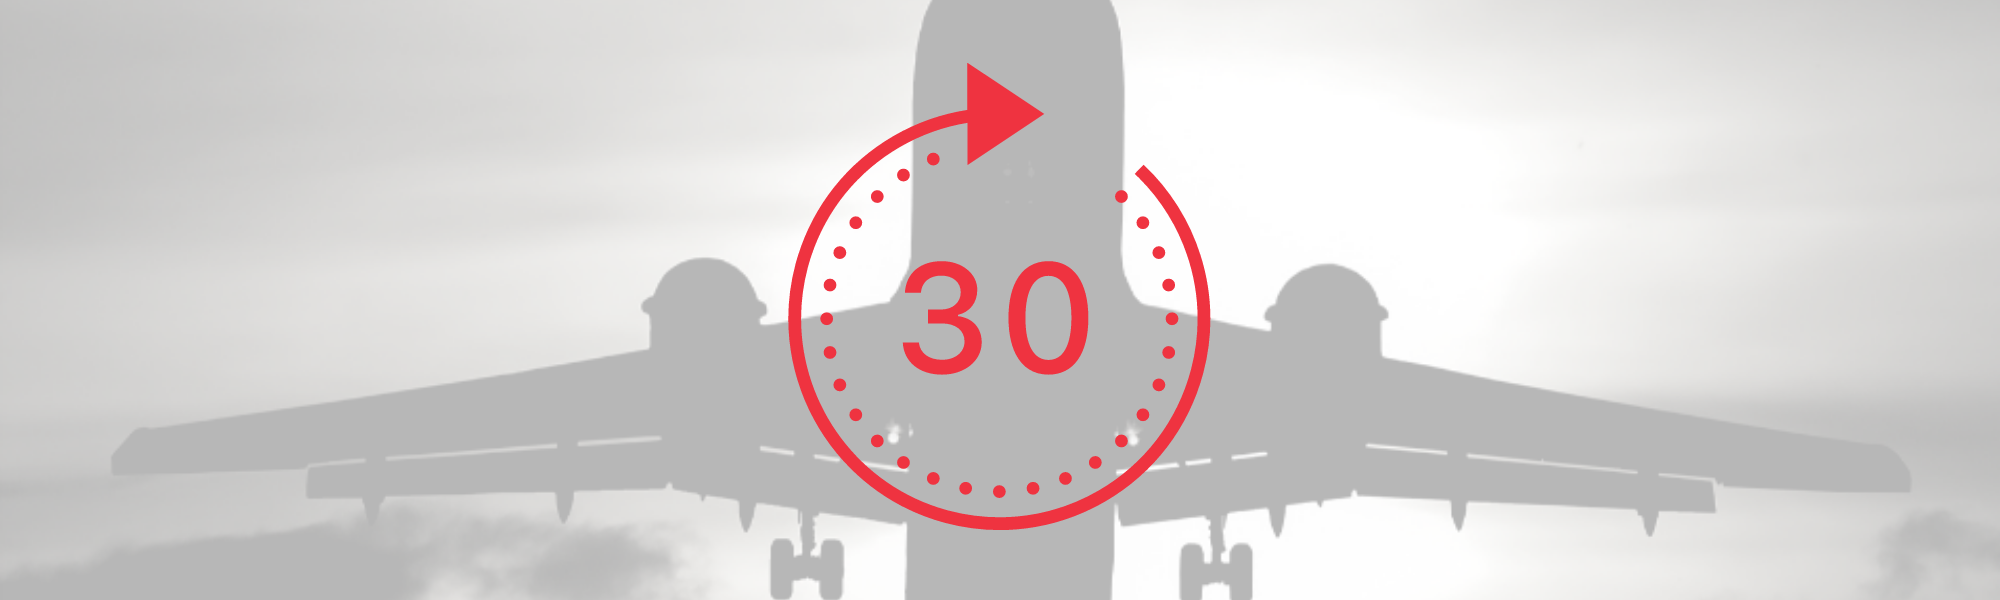 GOOSE Recruitment Signs 30th Airline As Pilot Recruitment Partner